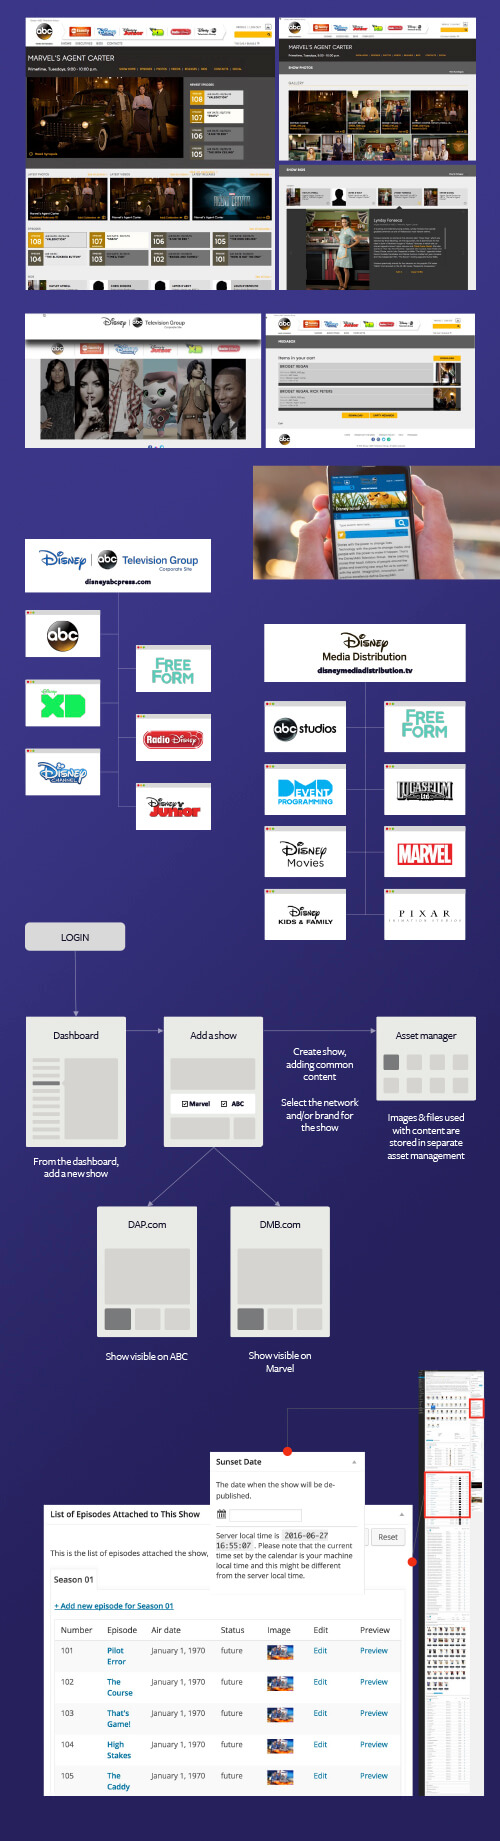 Open Source ROI Success for Disney ABC Press